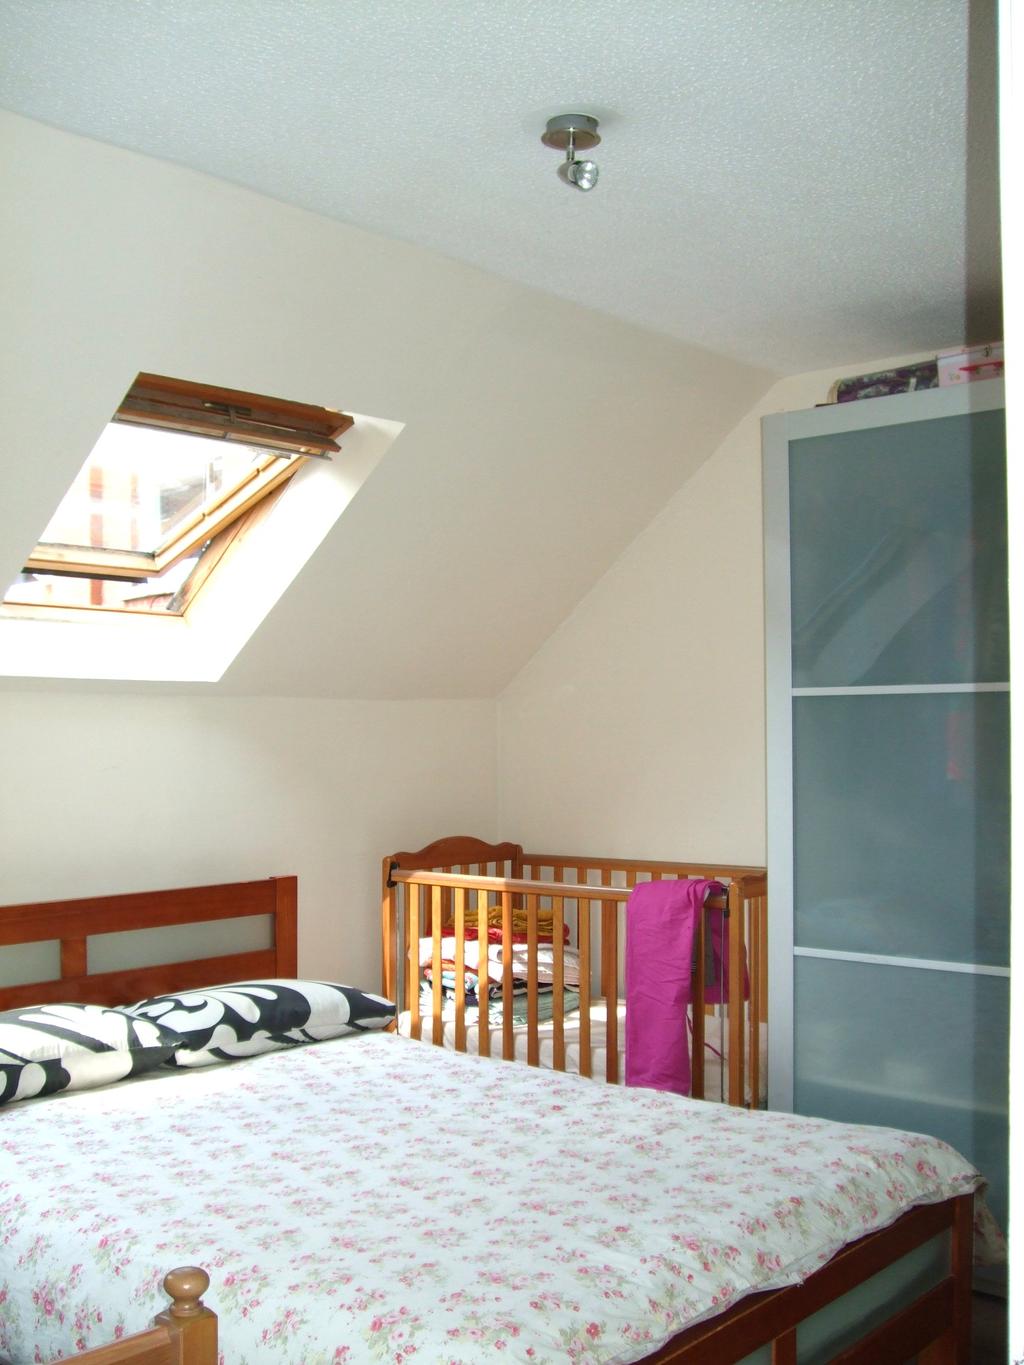 Bedroom One: 12 2 x 9 9 (3.72m x 2.98m). Two double-glazed skylights to rear aspect. Bedroom Two: 8 6 x 8 0 (2.60m x 2.45m). Double-glazed skylight window to front aspect.